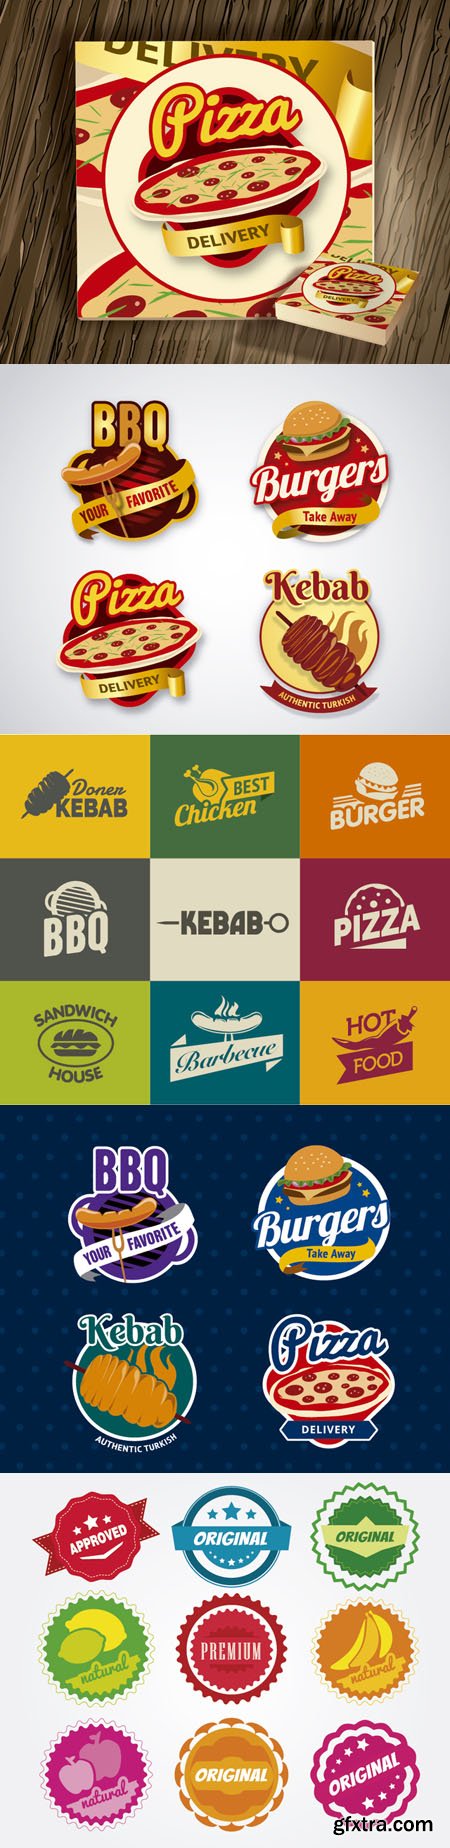 Fast Food Restaurant & Pizza Logos in Vector